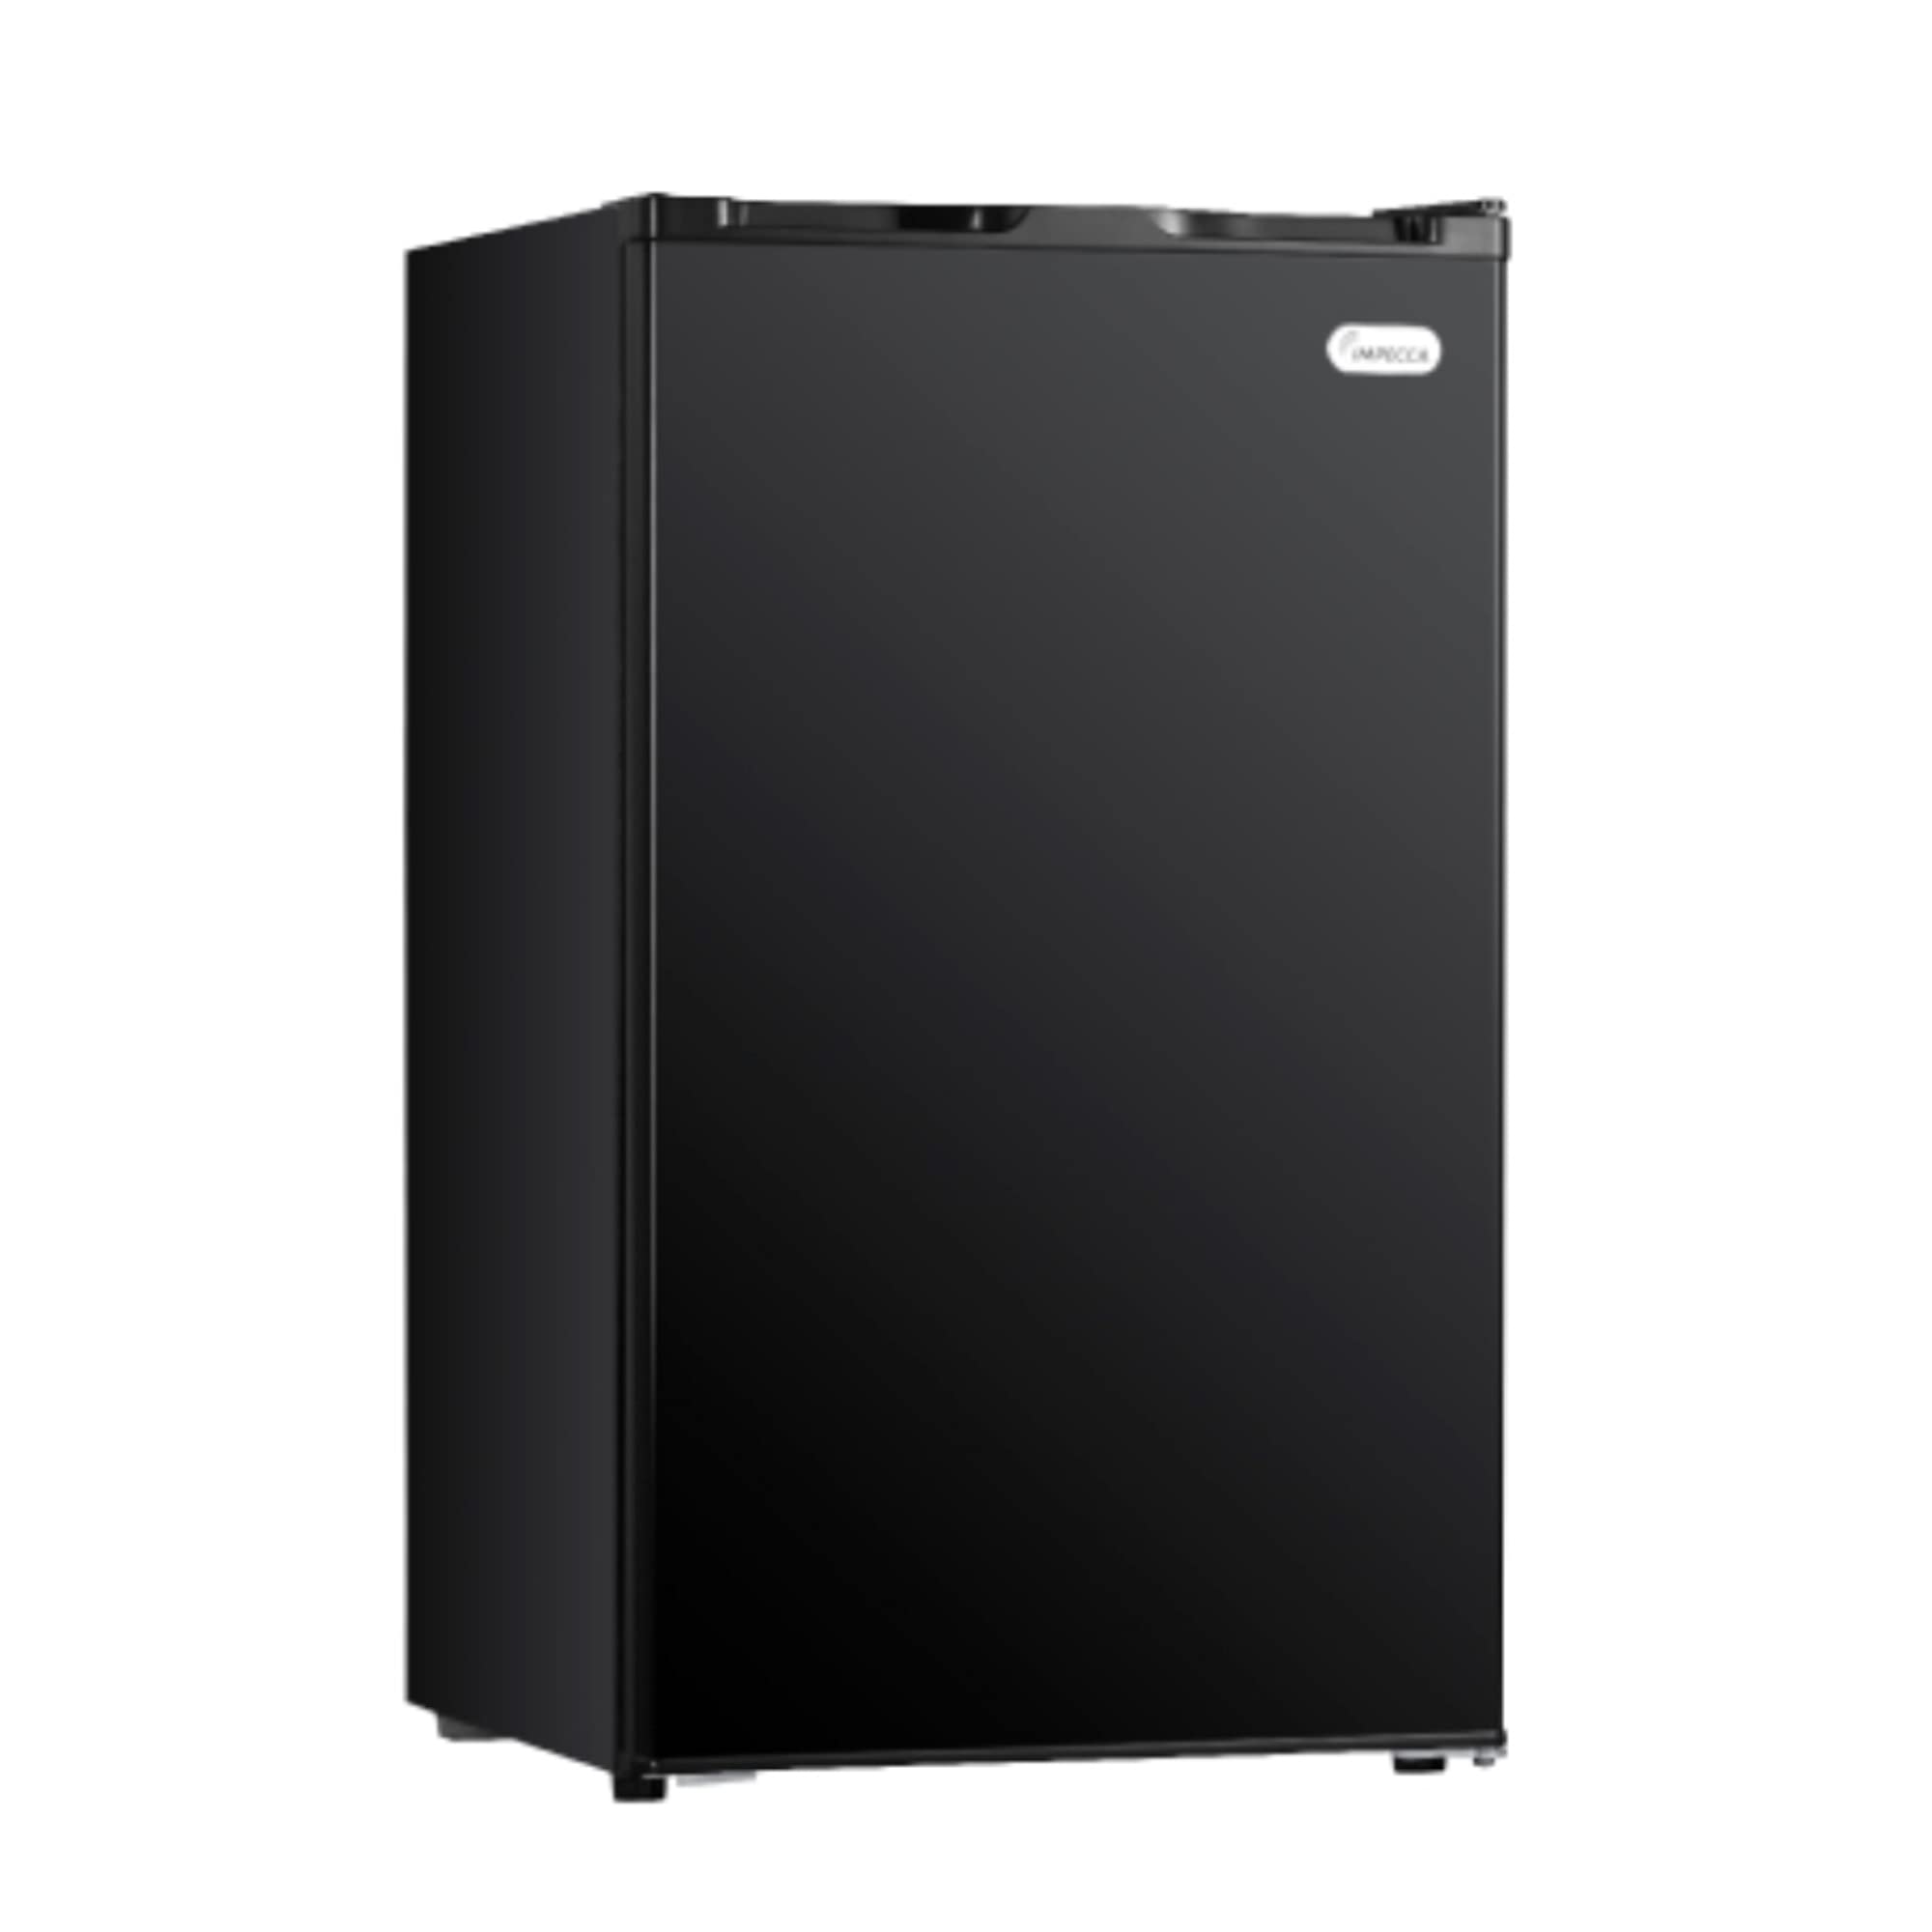 Impecca All-Refrigerator with Reversible Door, Interior Light, Classic Refrigerator, Compact Refrigerator Mini Fridge, 4.4 Cubic Feet, Black